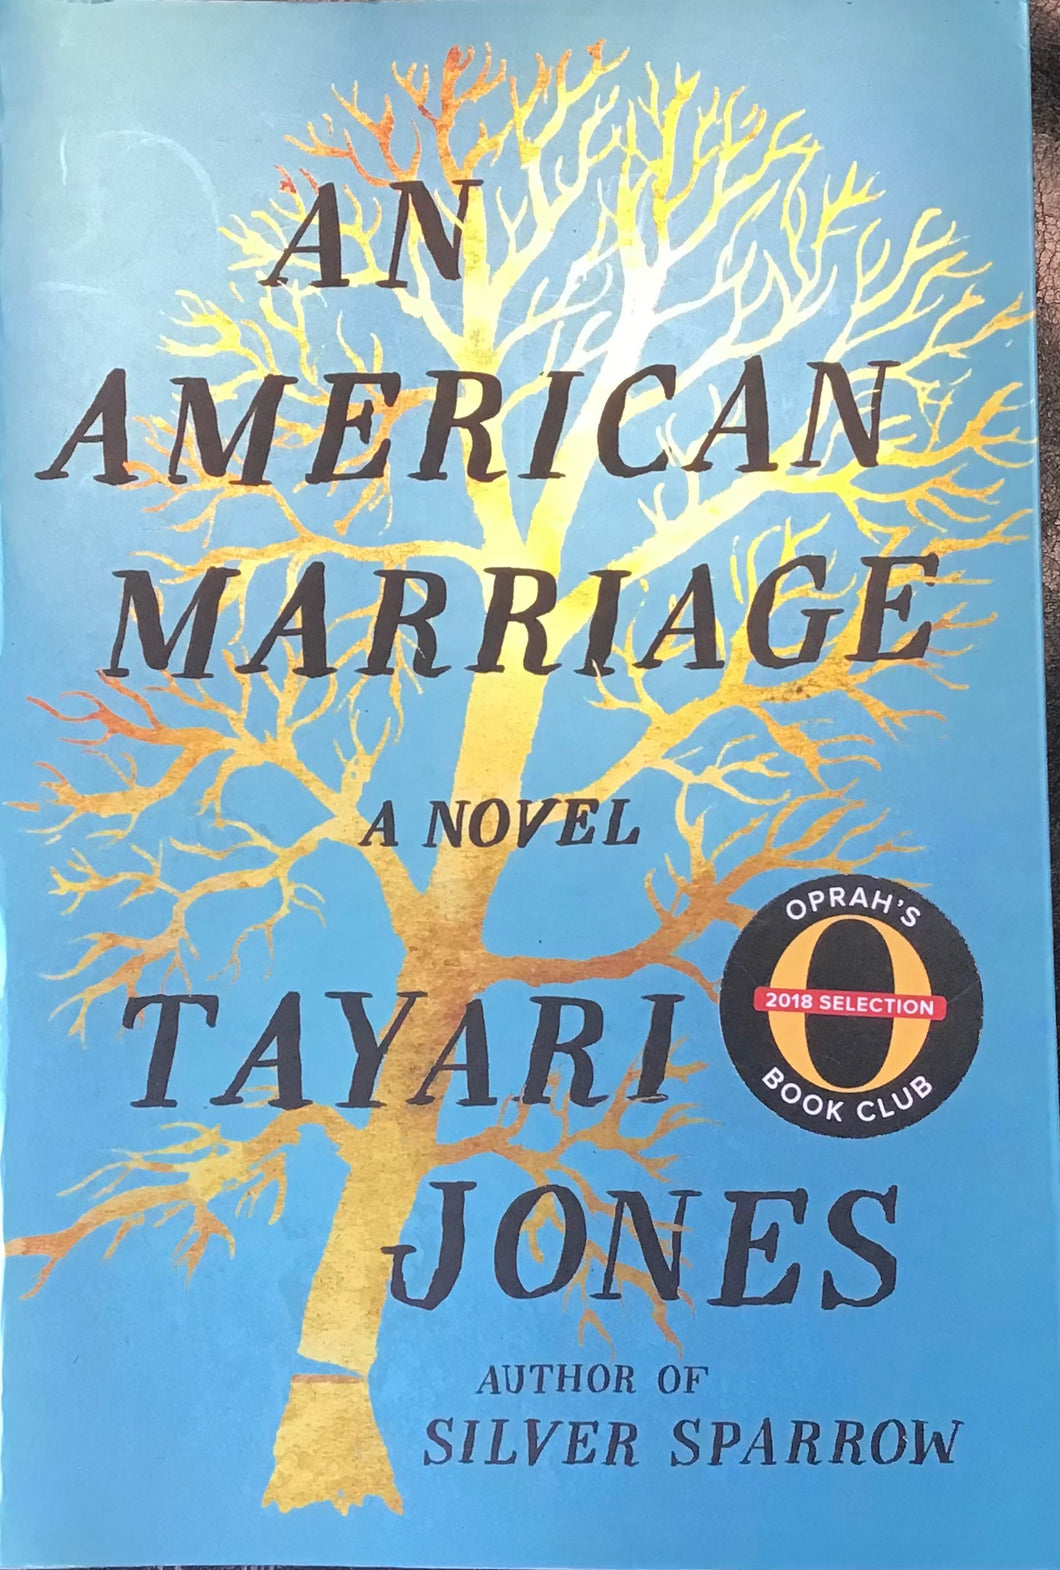 An American Marriage, Tayari Jones